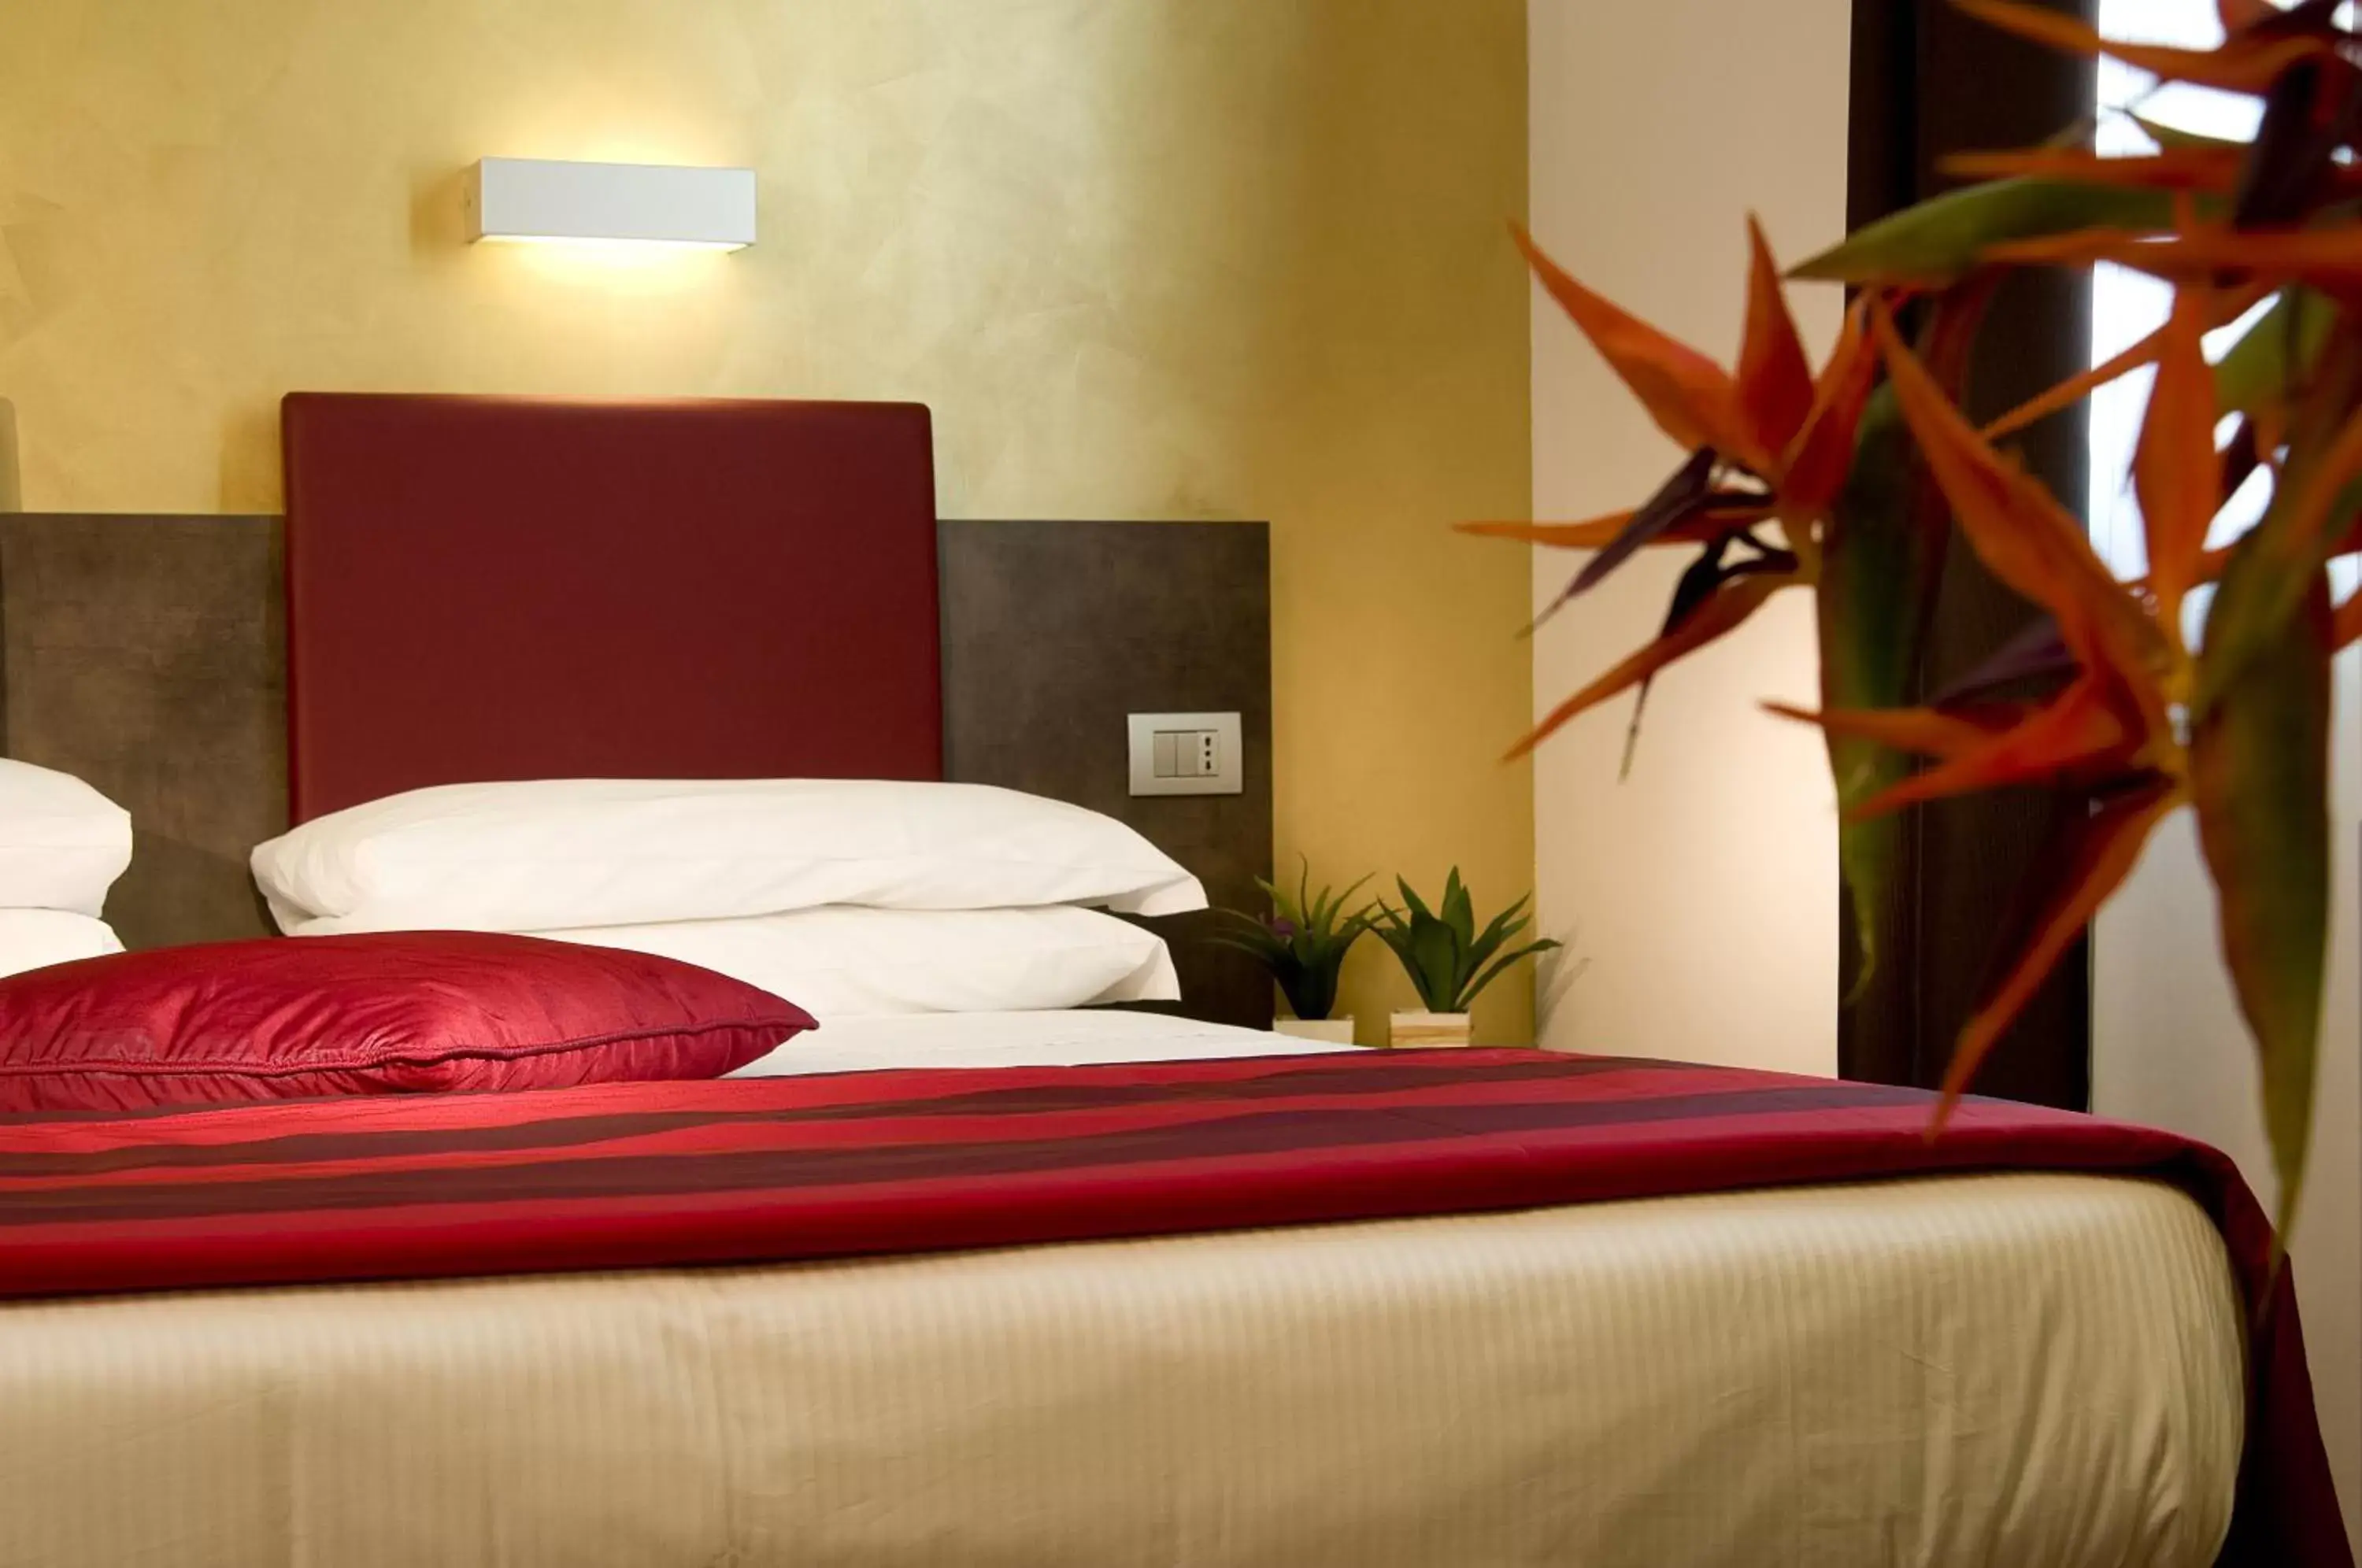 Bed in Hotel Trevi - Gruppo Trevi Hotels